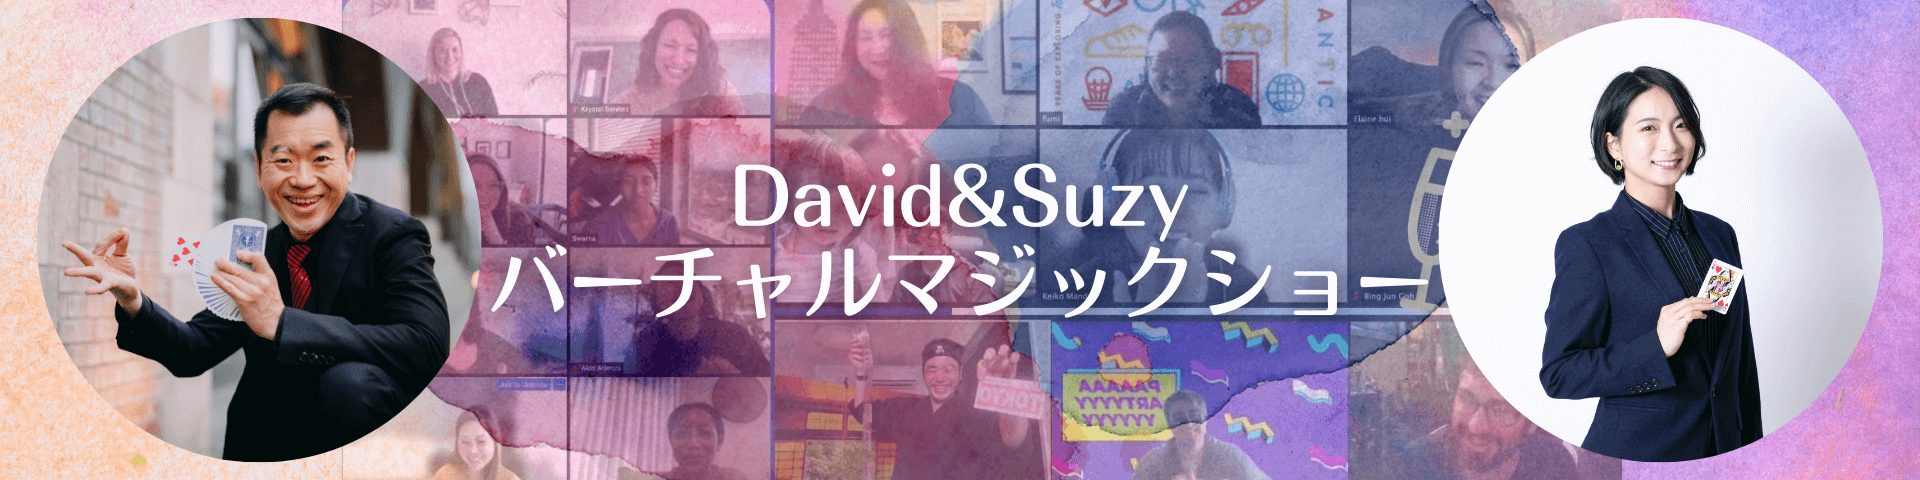 David & Suzy バーチャルマジックショー